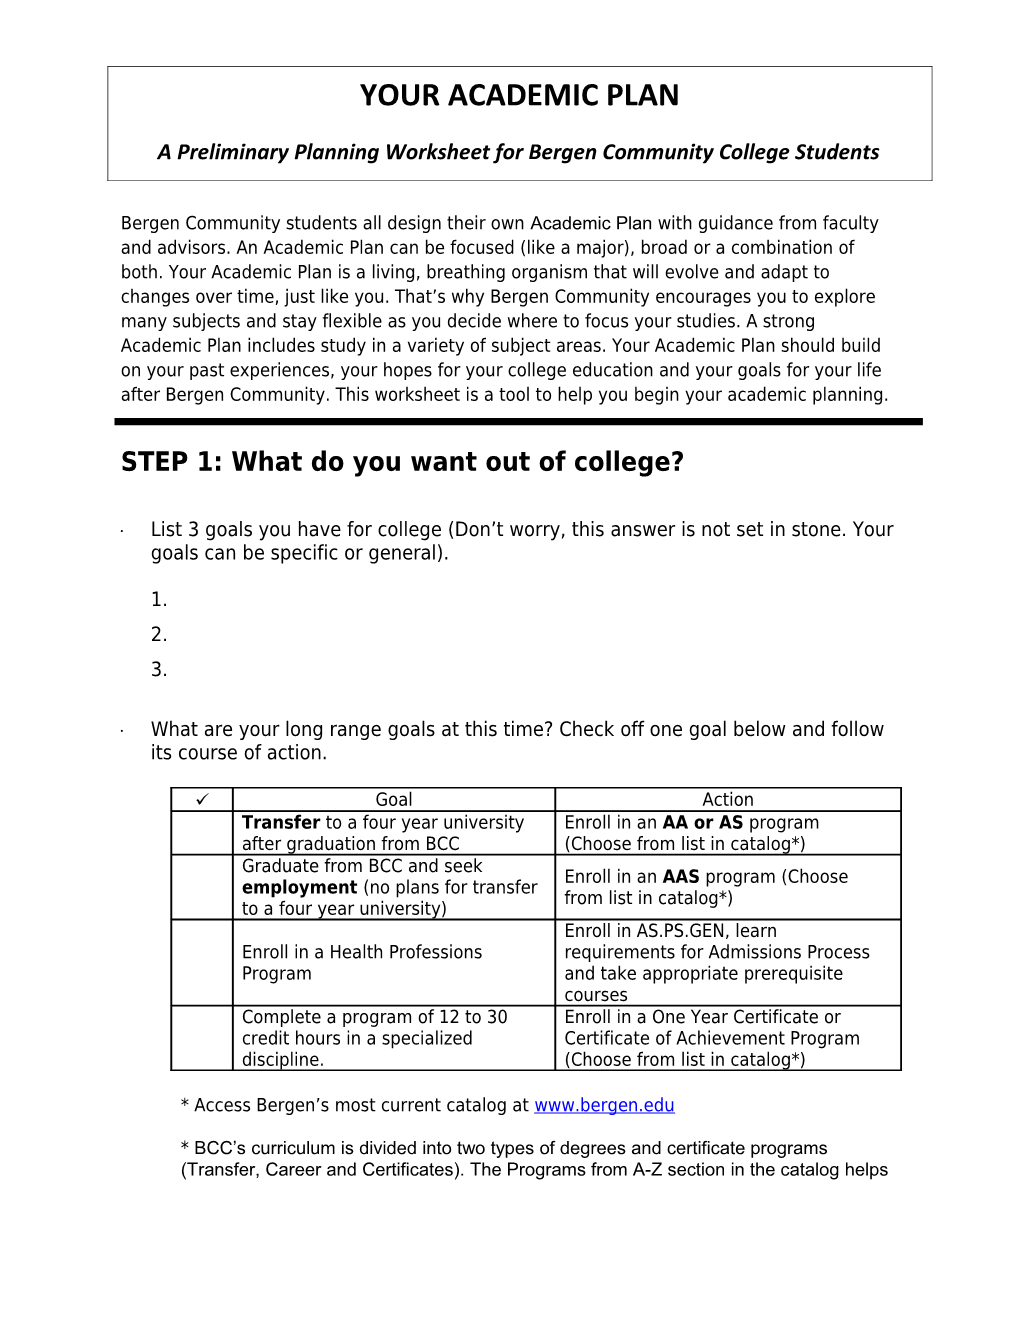 A Preliminary Planning Worksheet for New Freshmen